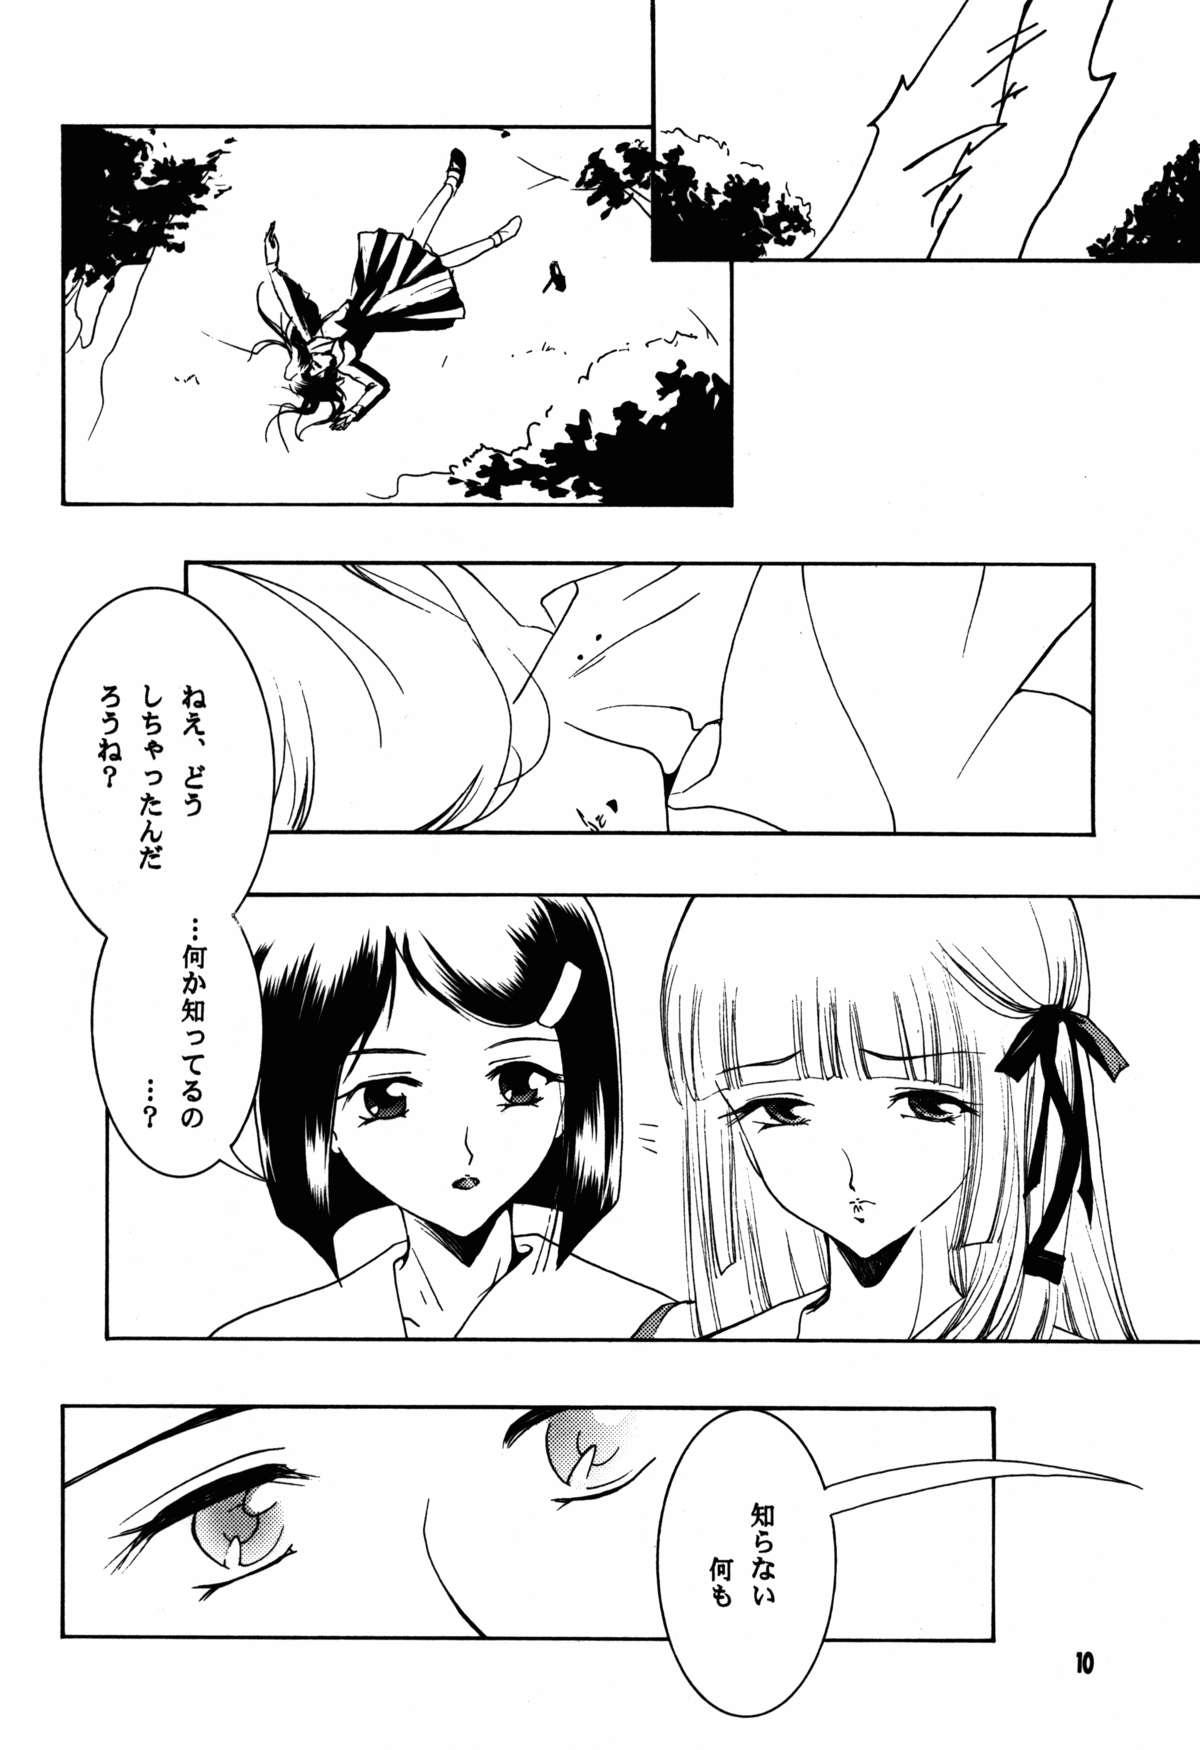 Fucked Hadashi no VAMPIRE 17 - Vampire princess miyu Toilet - Page 10